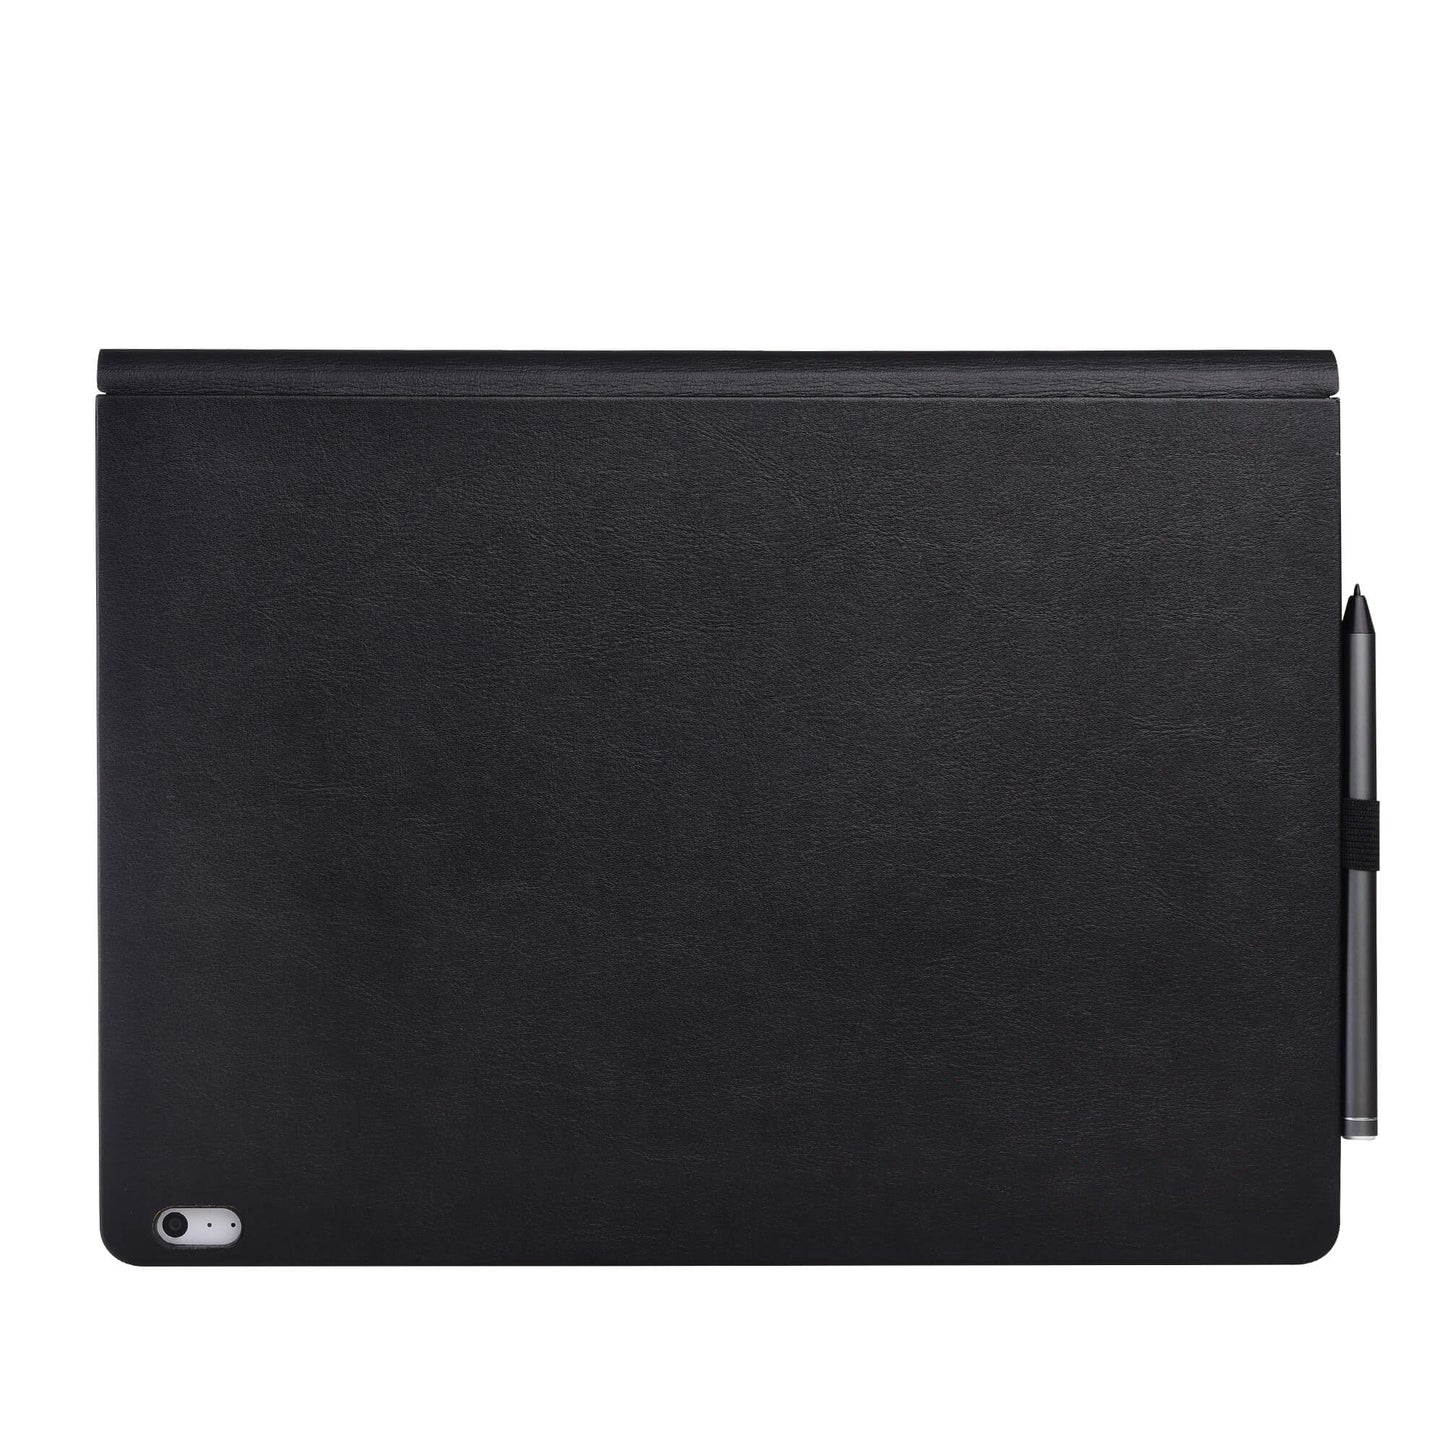 Surface Book 3 leather case -back side image